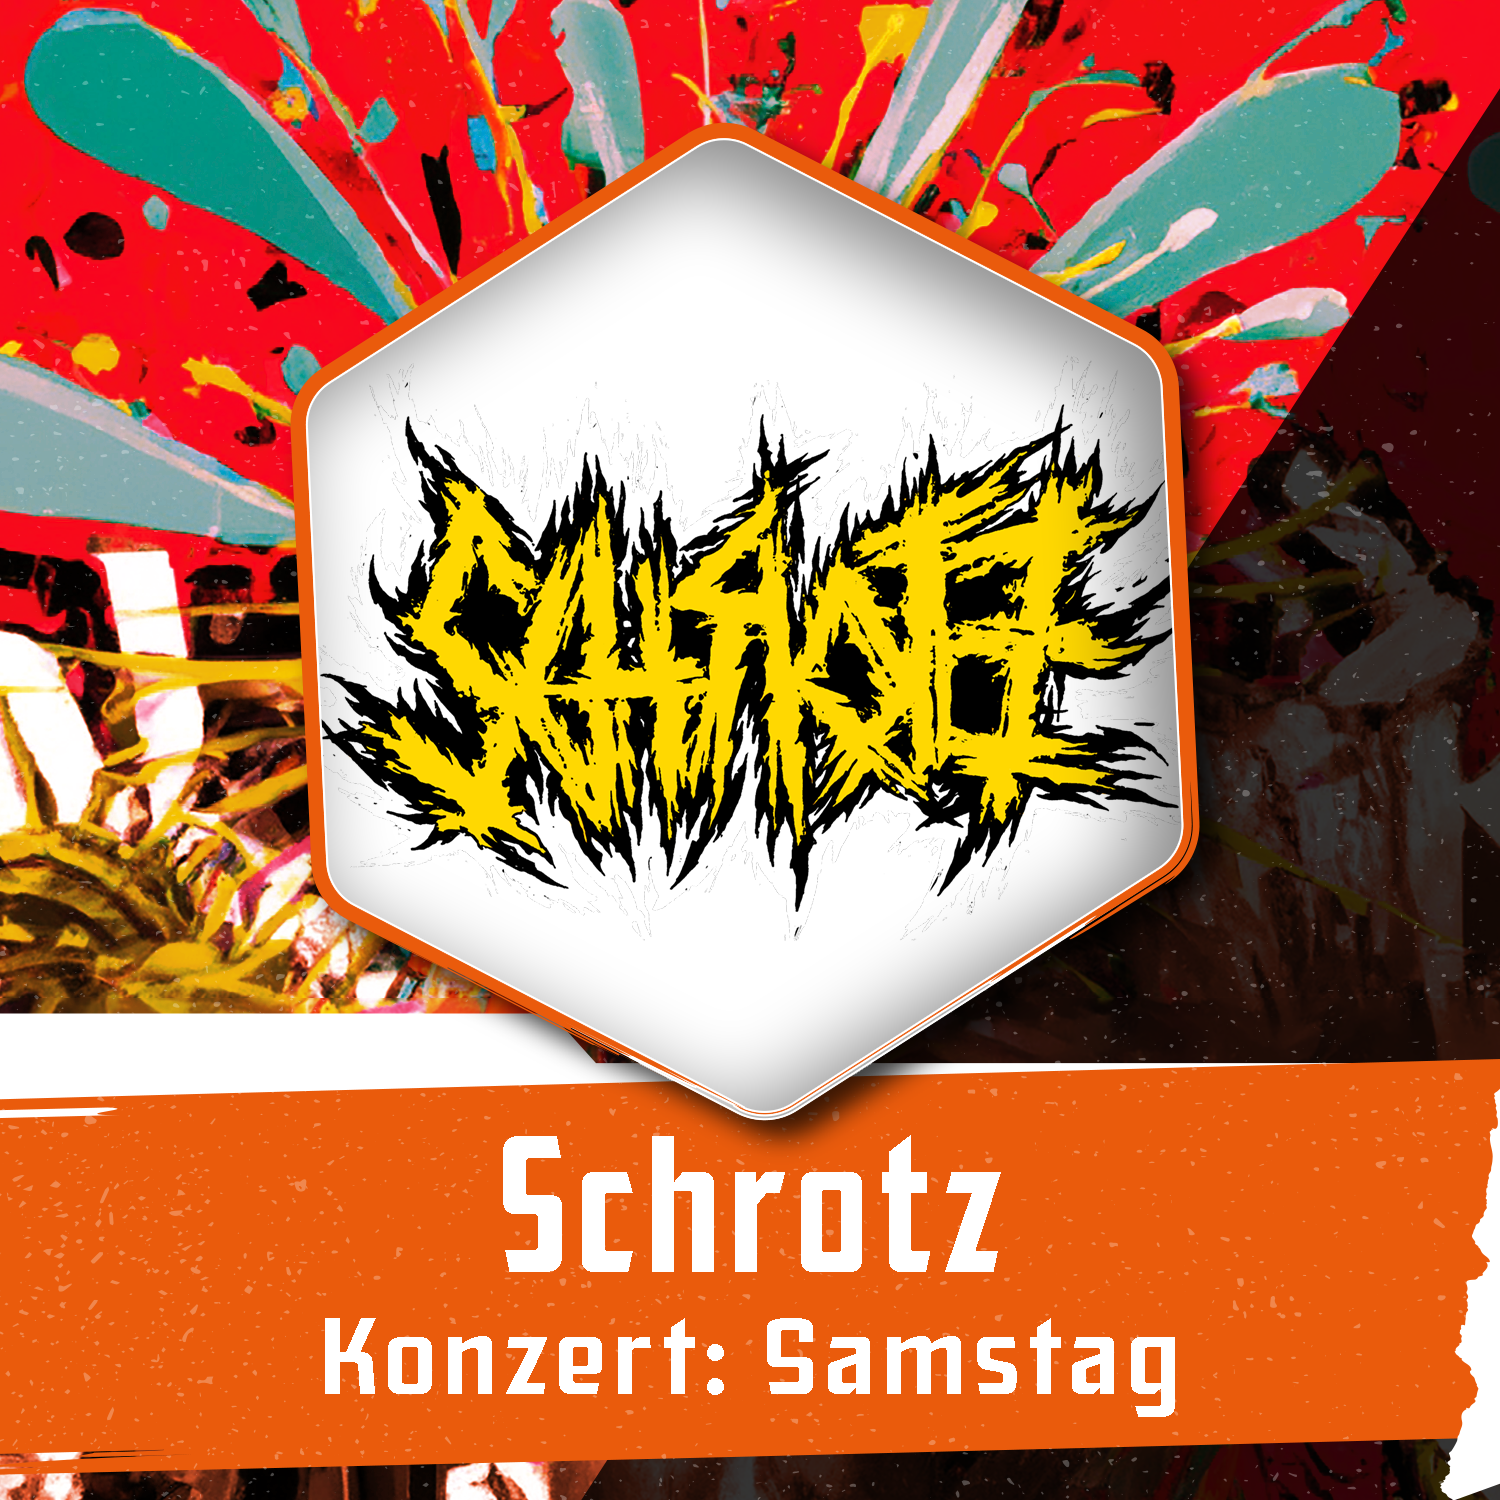 Schrotz